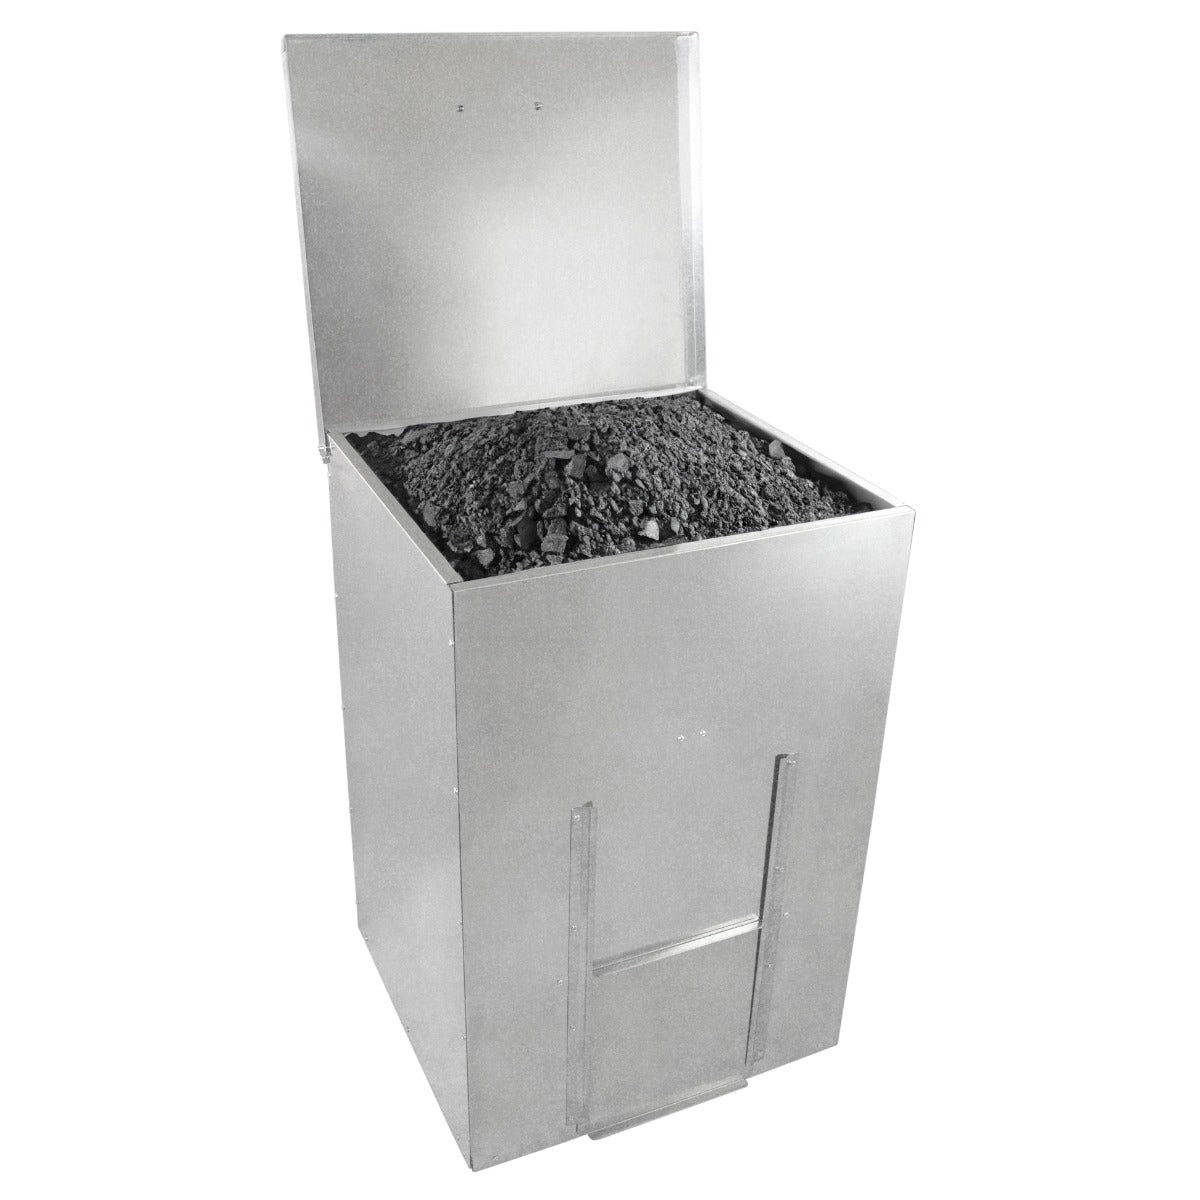 Coal Bunker - 150kg